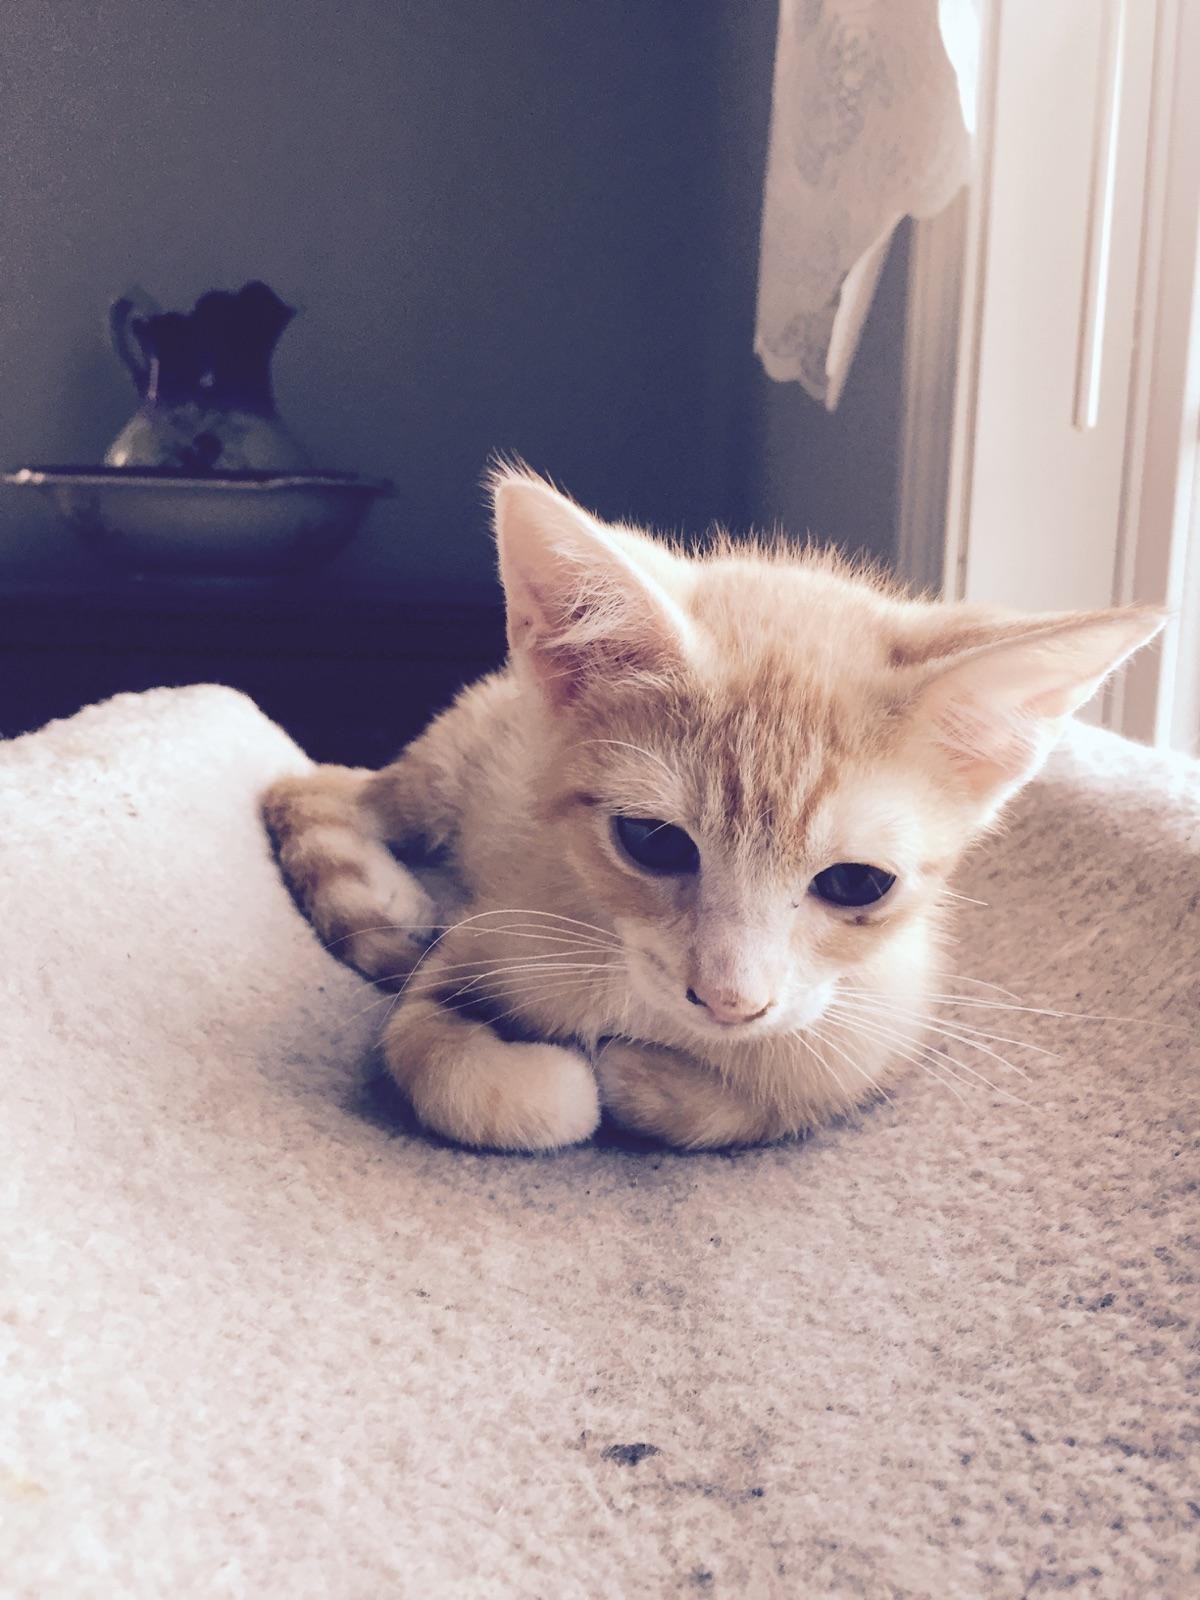 Raynham Ma American Shorthair Meet Orange Tabby Kitten A Pet For Adoption